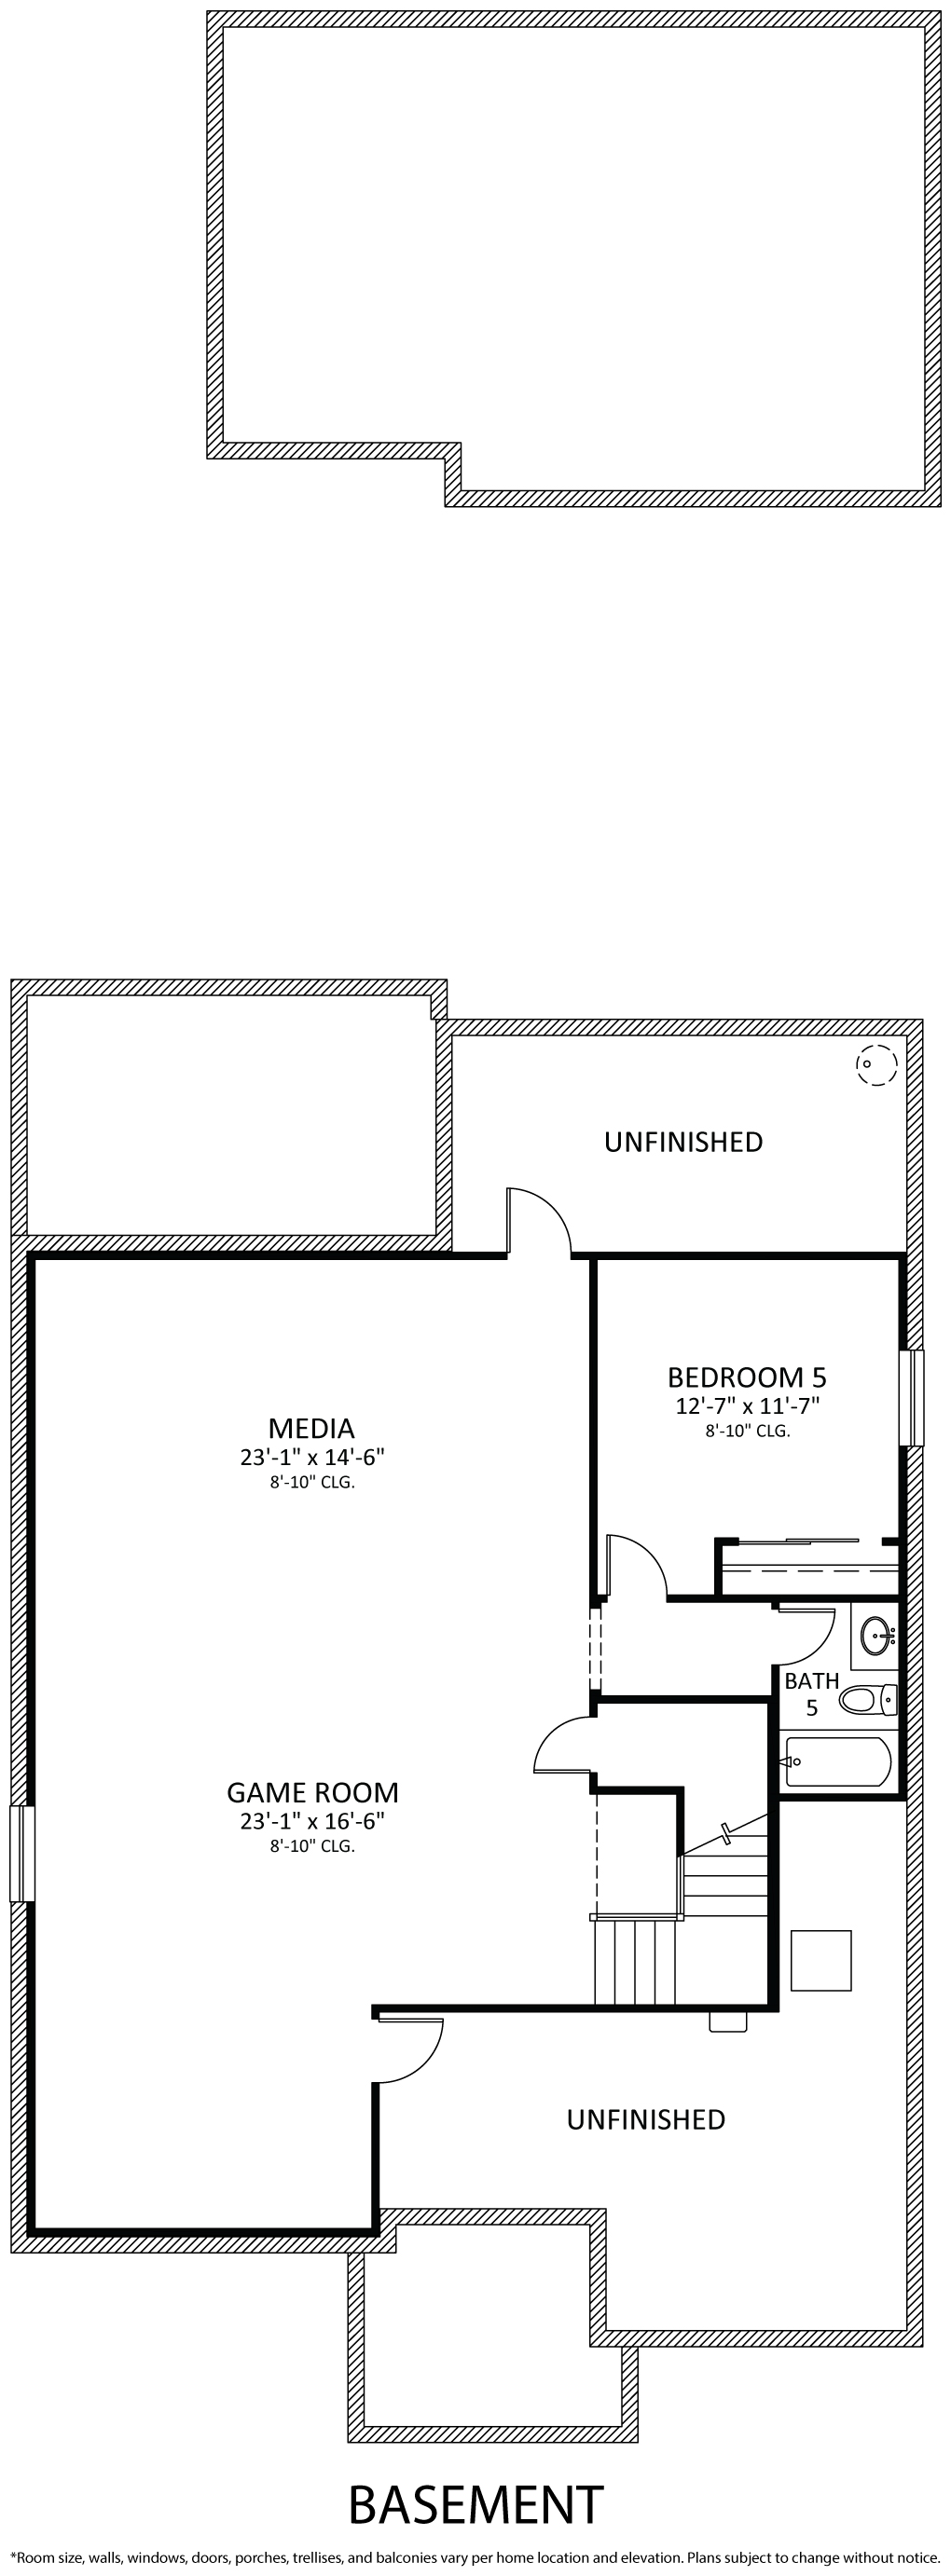 Floorplan TJH_151_Humboldt_Cascade_B.jpg for 151 S Humboldt Street